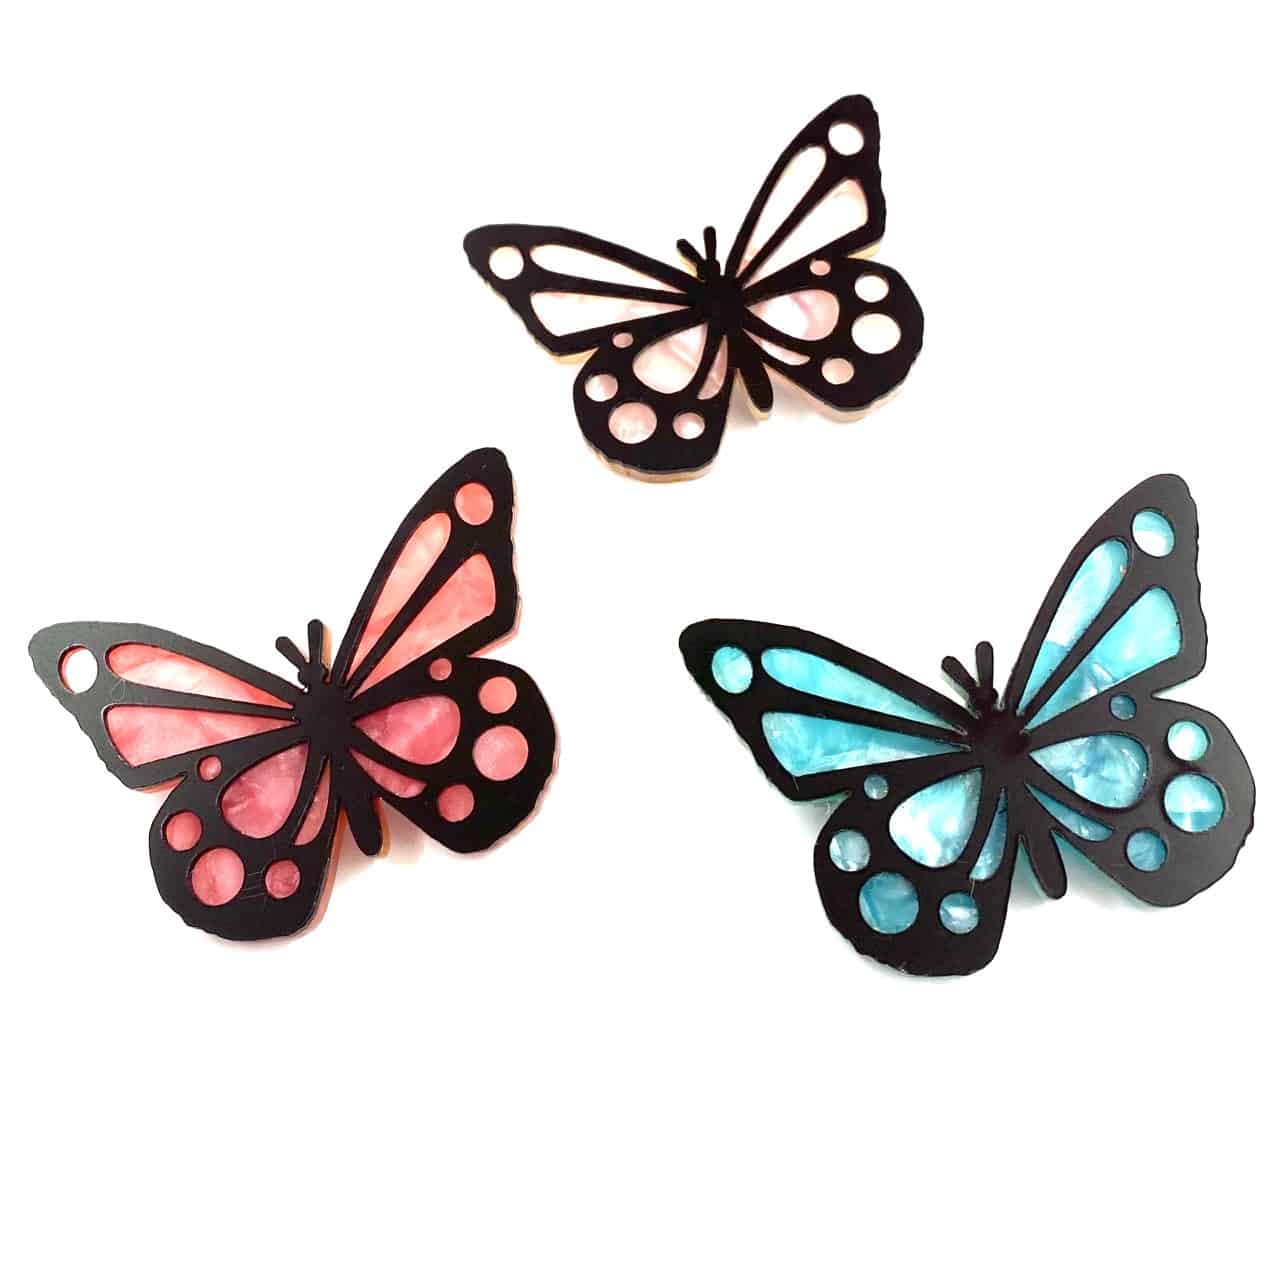 Haus of Dizzy 'Beautiful Butterfly' Pin 🦋